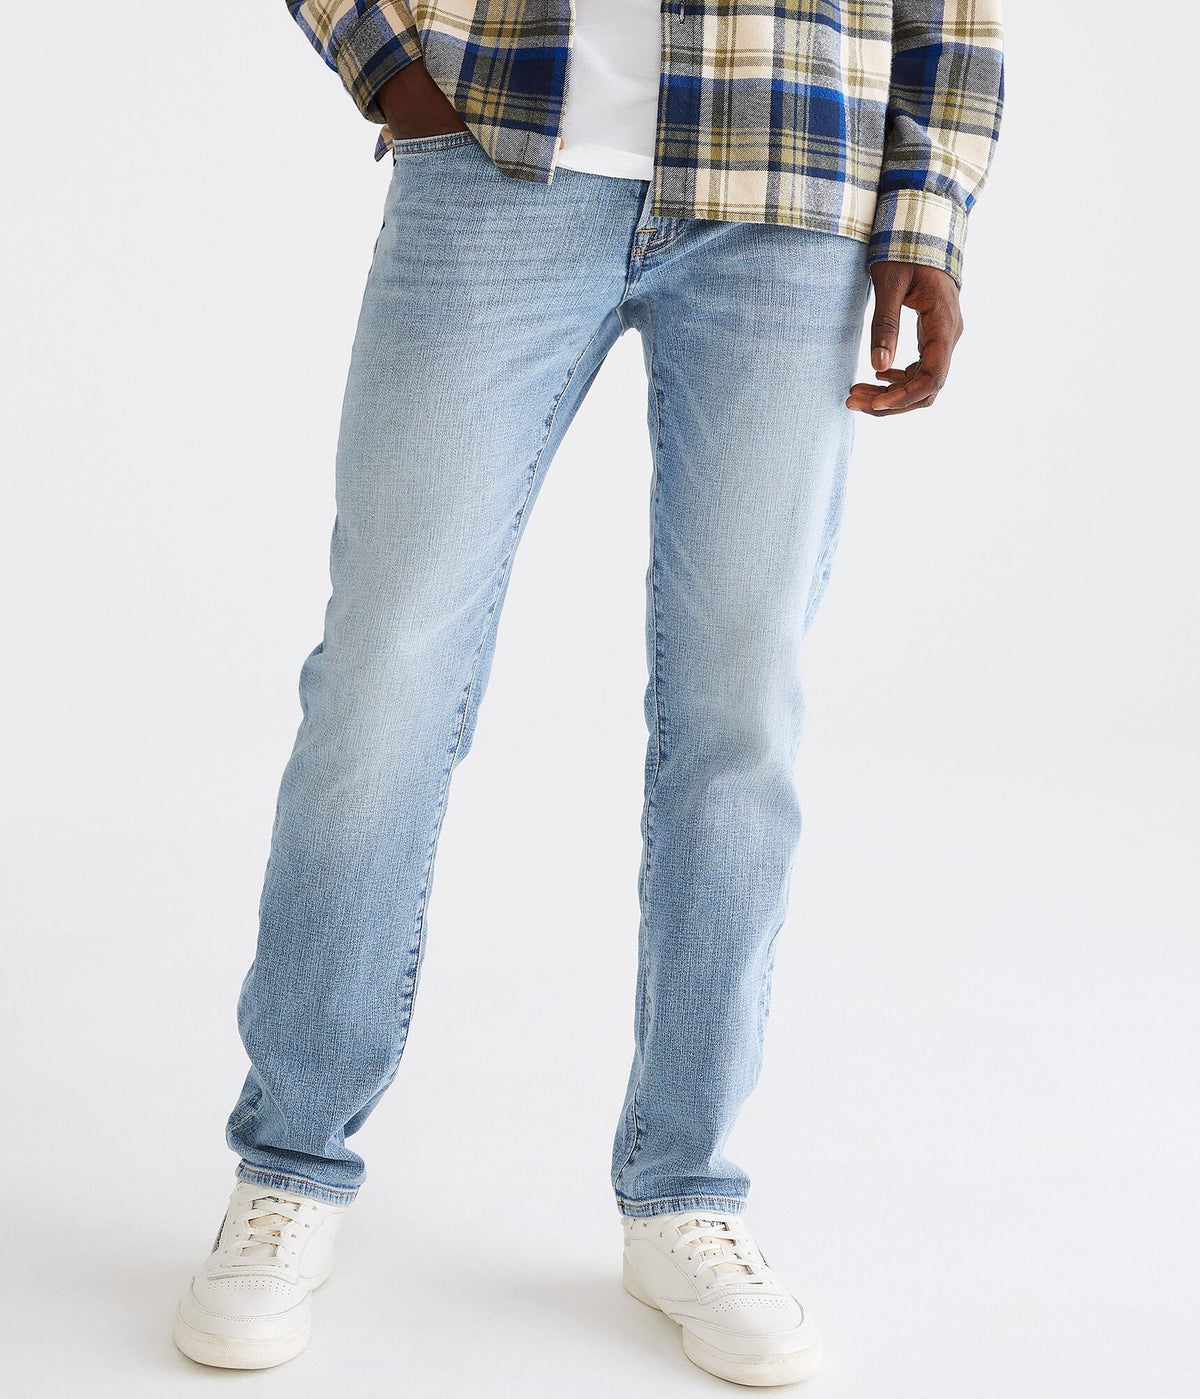 Aeropostale Mens' Slim Jean - Washed Denim - Size 40X34 - Cotton - Teen Fashion & Clothing Medium Wash